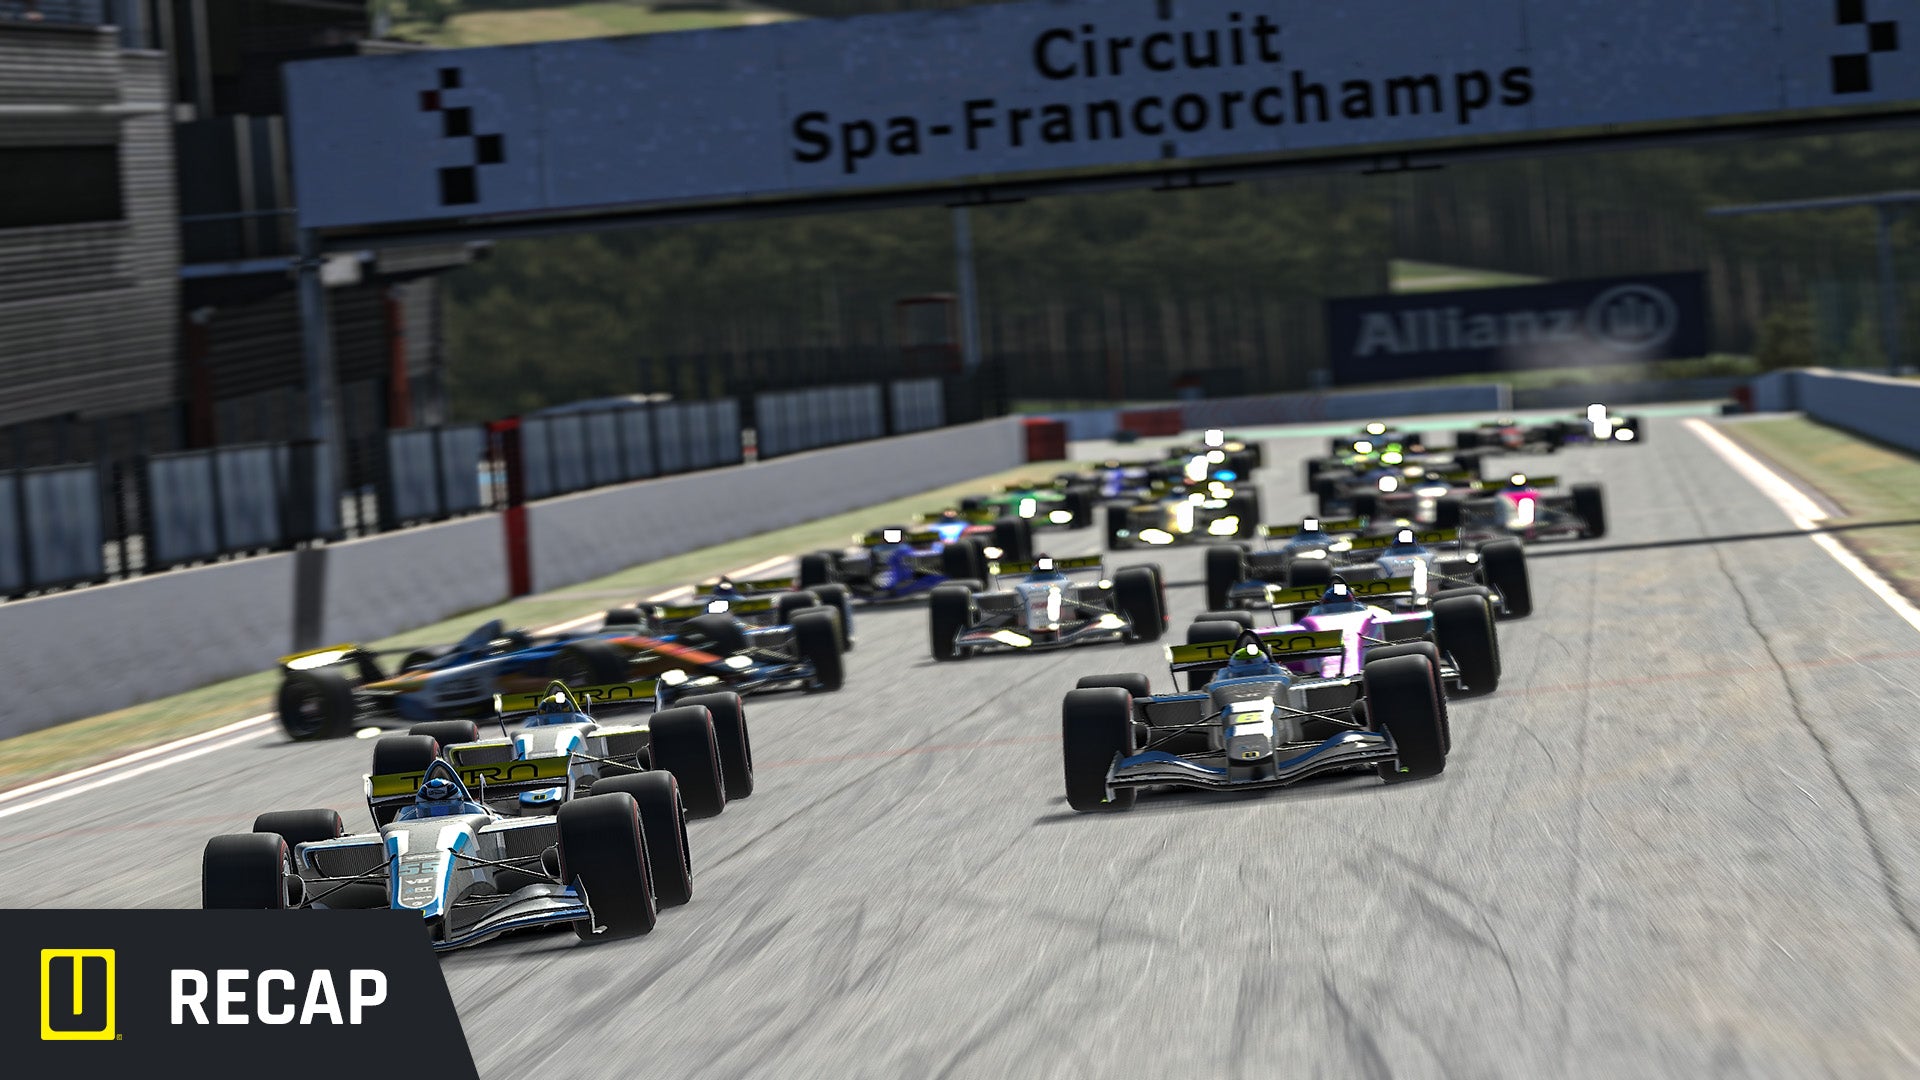 Grand Prix Turn Racing iRacing Series Race 1 Recap